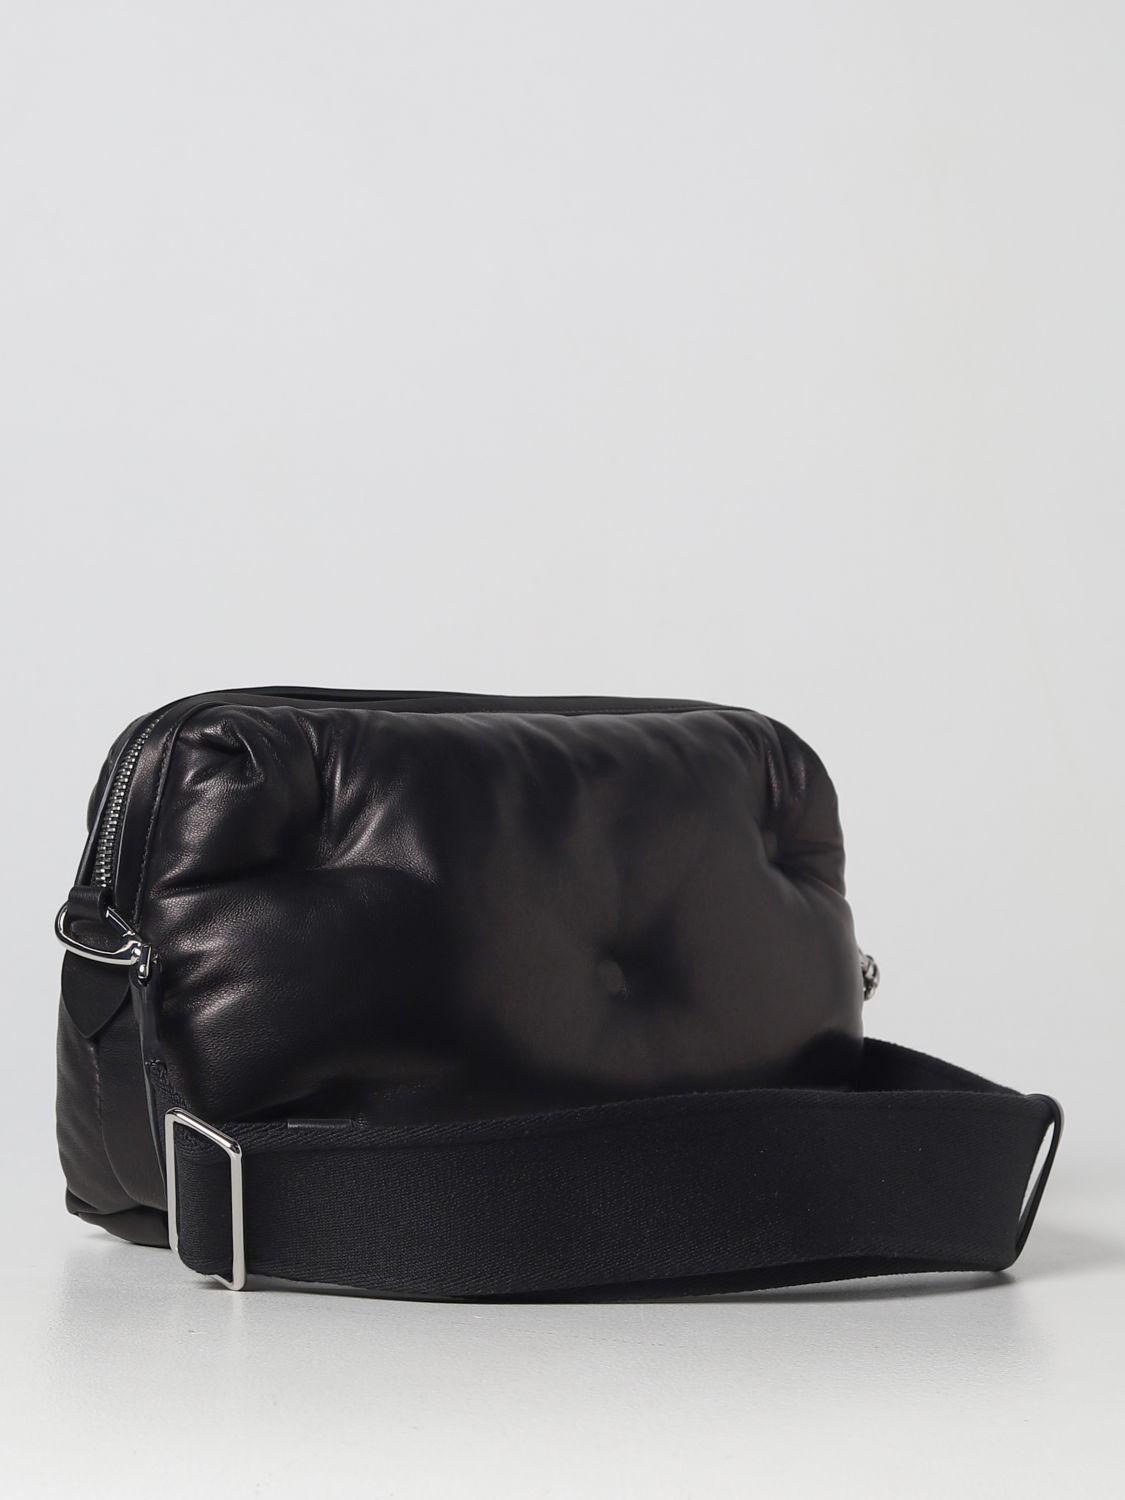 Maison Margiela Briefcase in Black for Men | Lyst